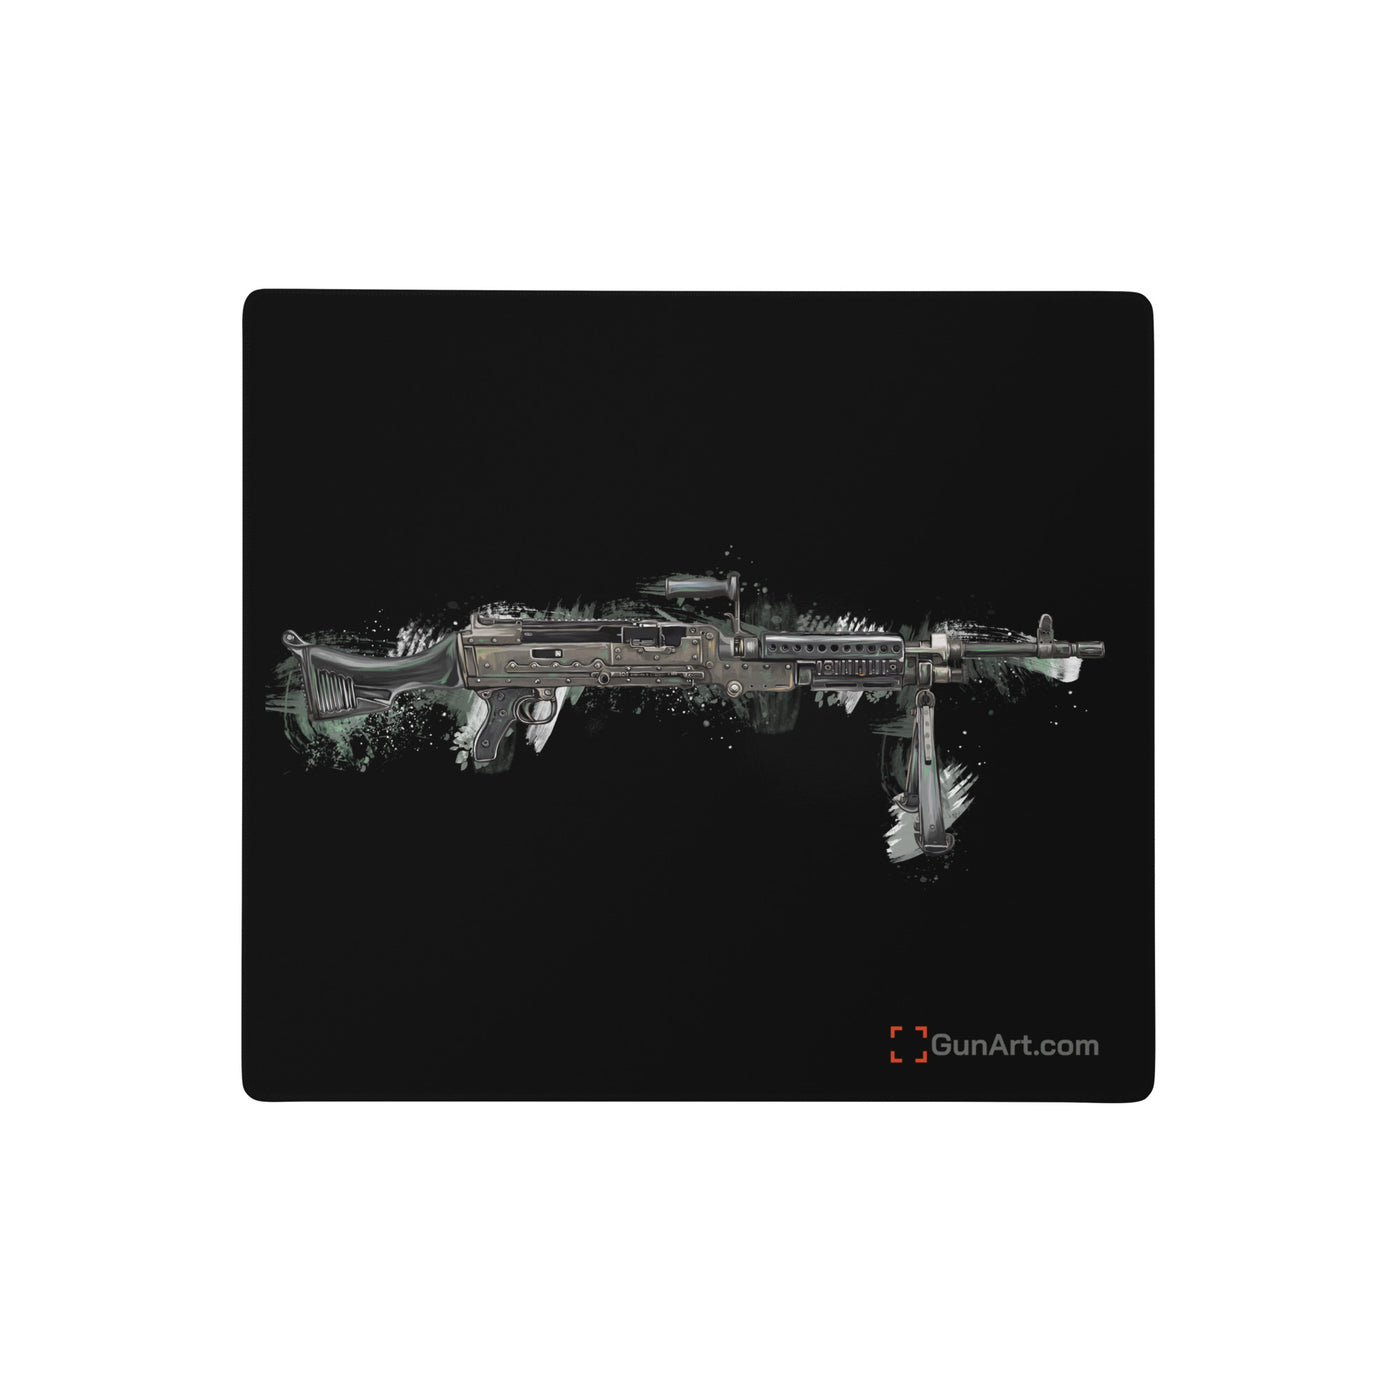 M240B - Belt Fed 7.62x51 Machine Gun Gaming mouse Pad - Black Background